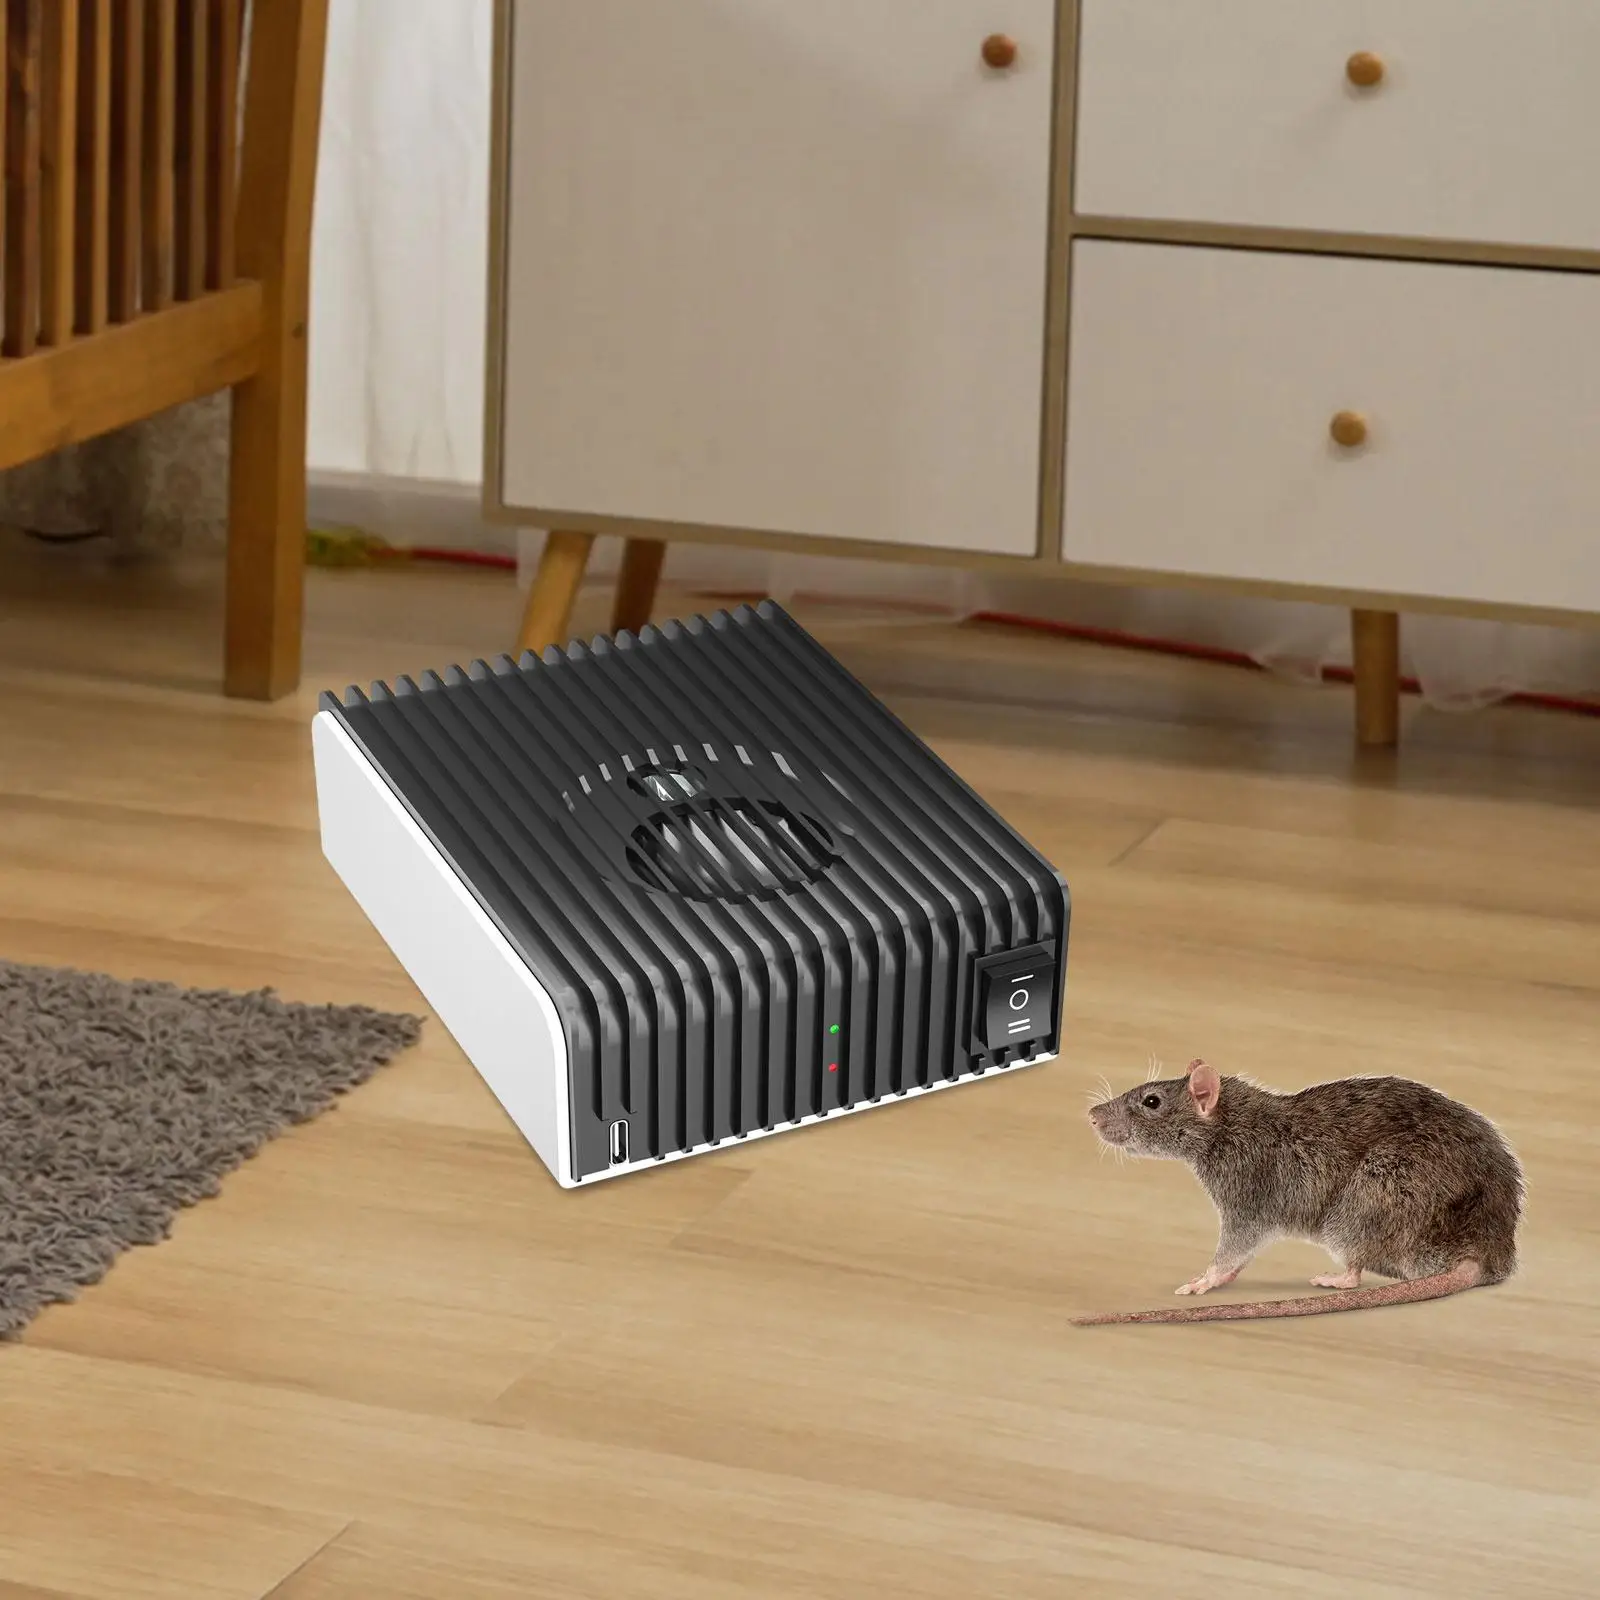 Sound Wave Mouse Repeller Mouse Deterrent for Basement Car Indoor Outdoor